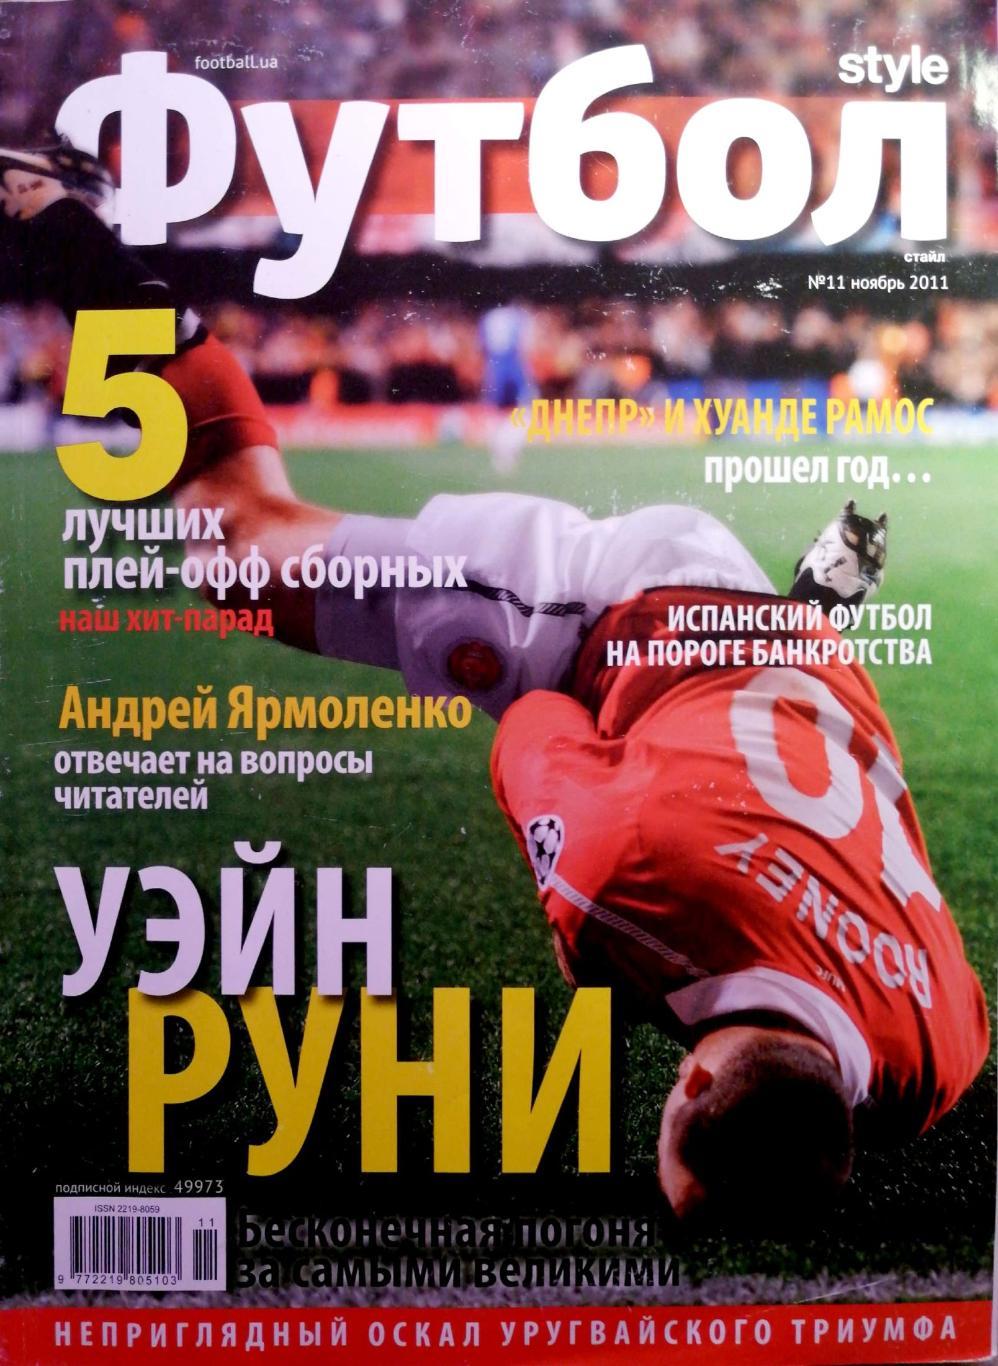 Журнал Футбол style №3, ноябрь 2011 (Украина) Руни, Хуанде Рамос, Испания